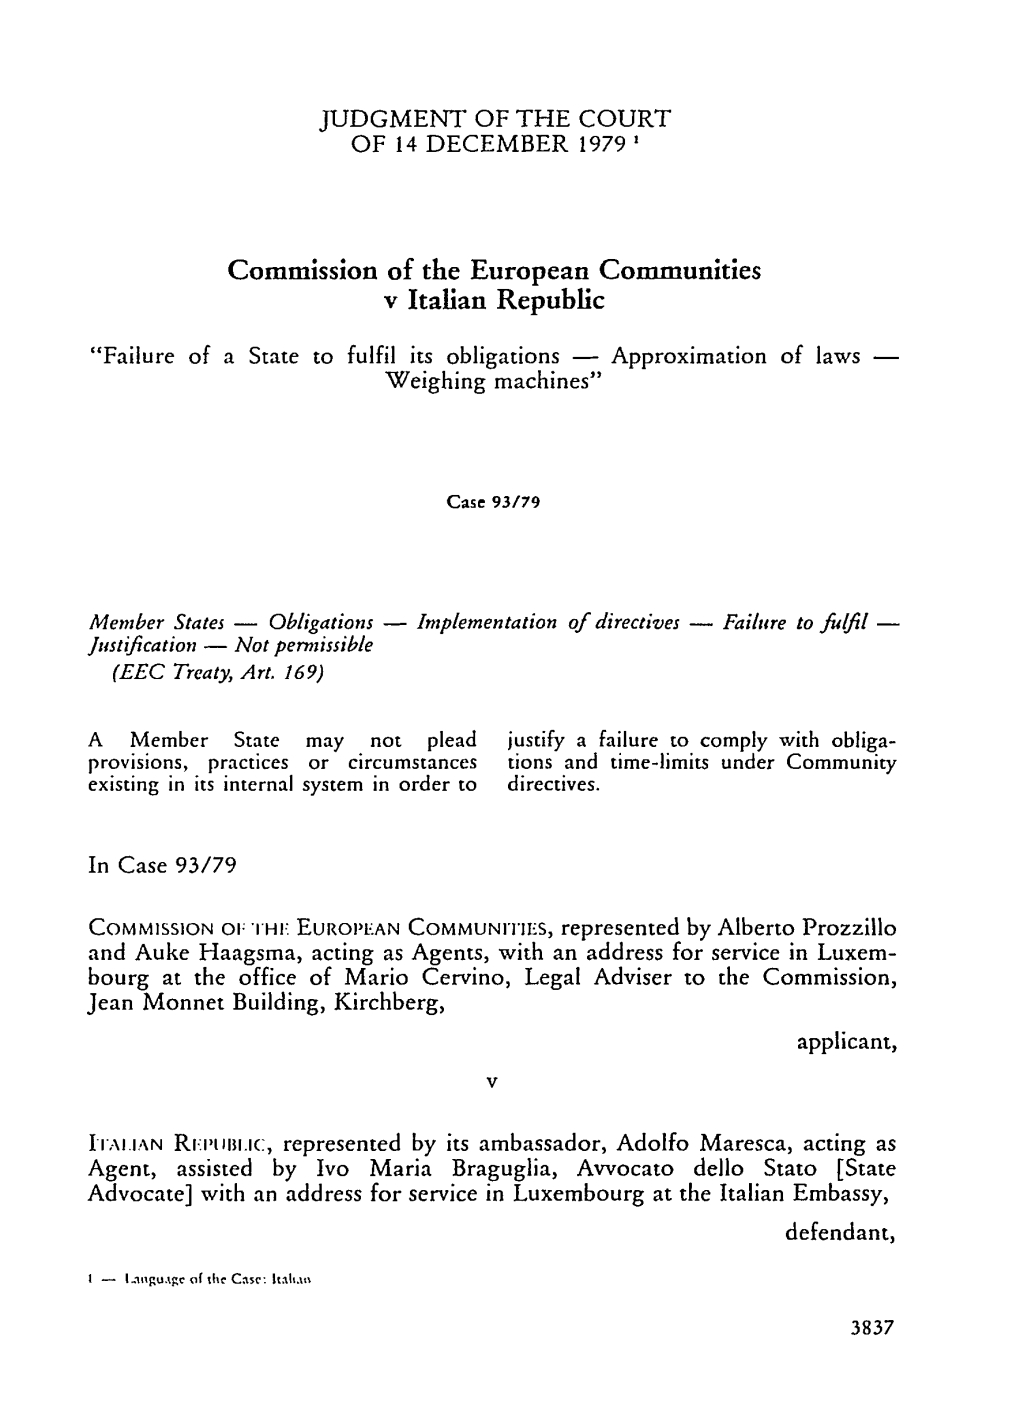 Commission of the European Communities V Italian Republic